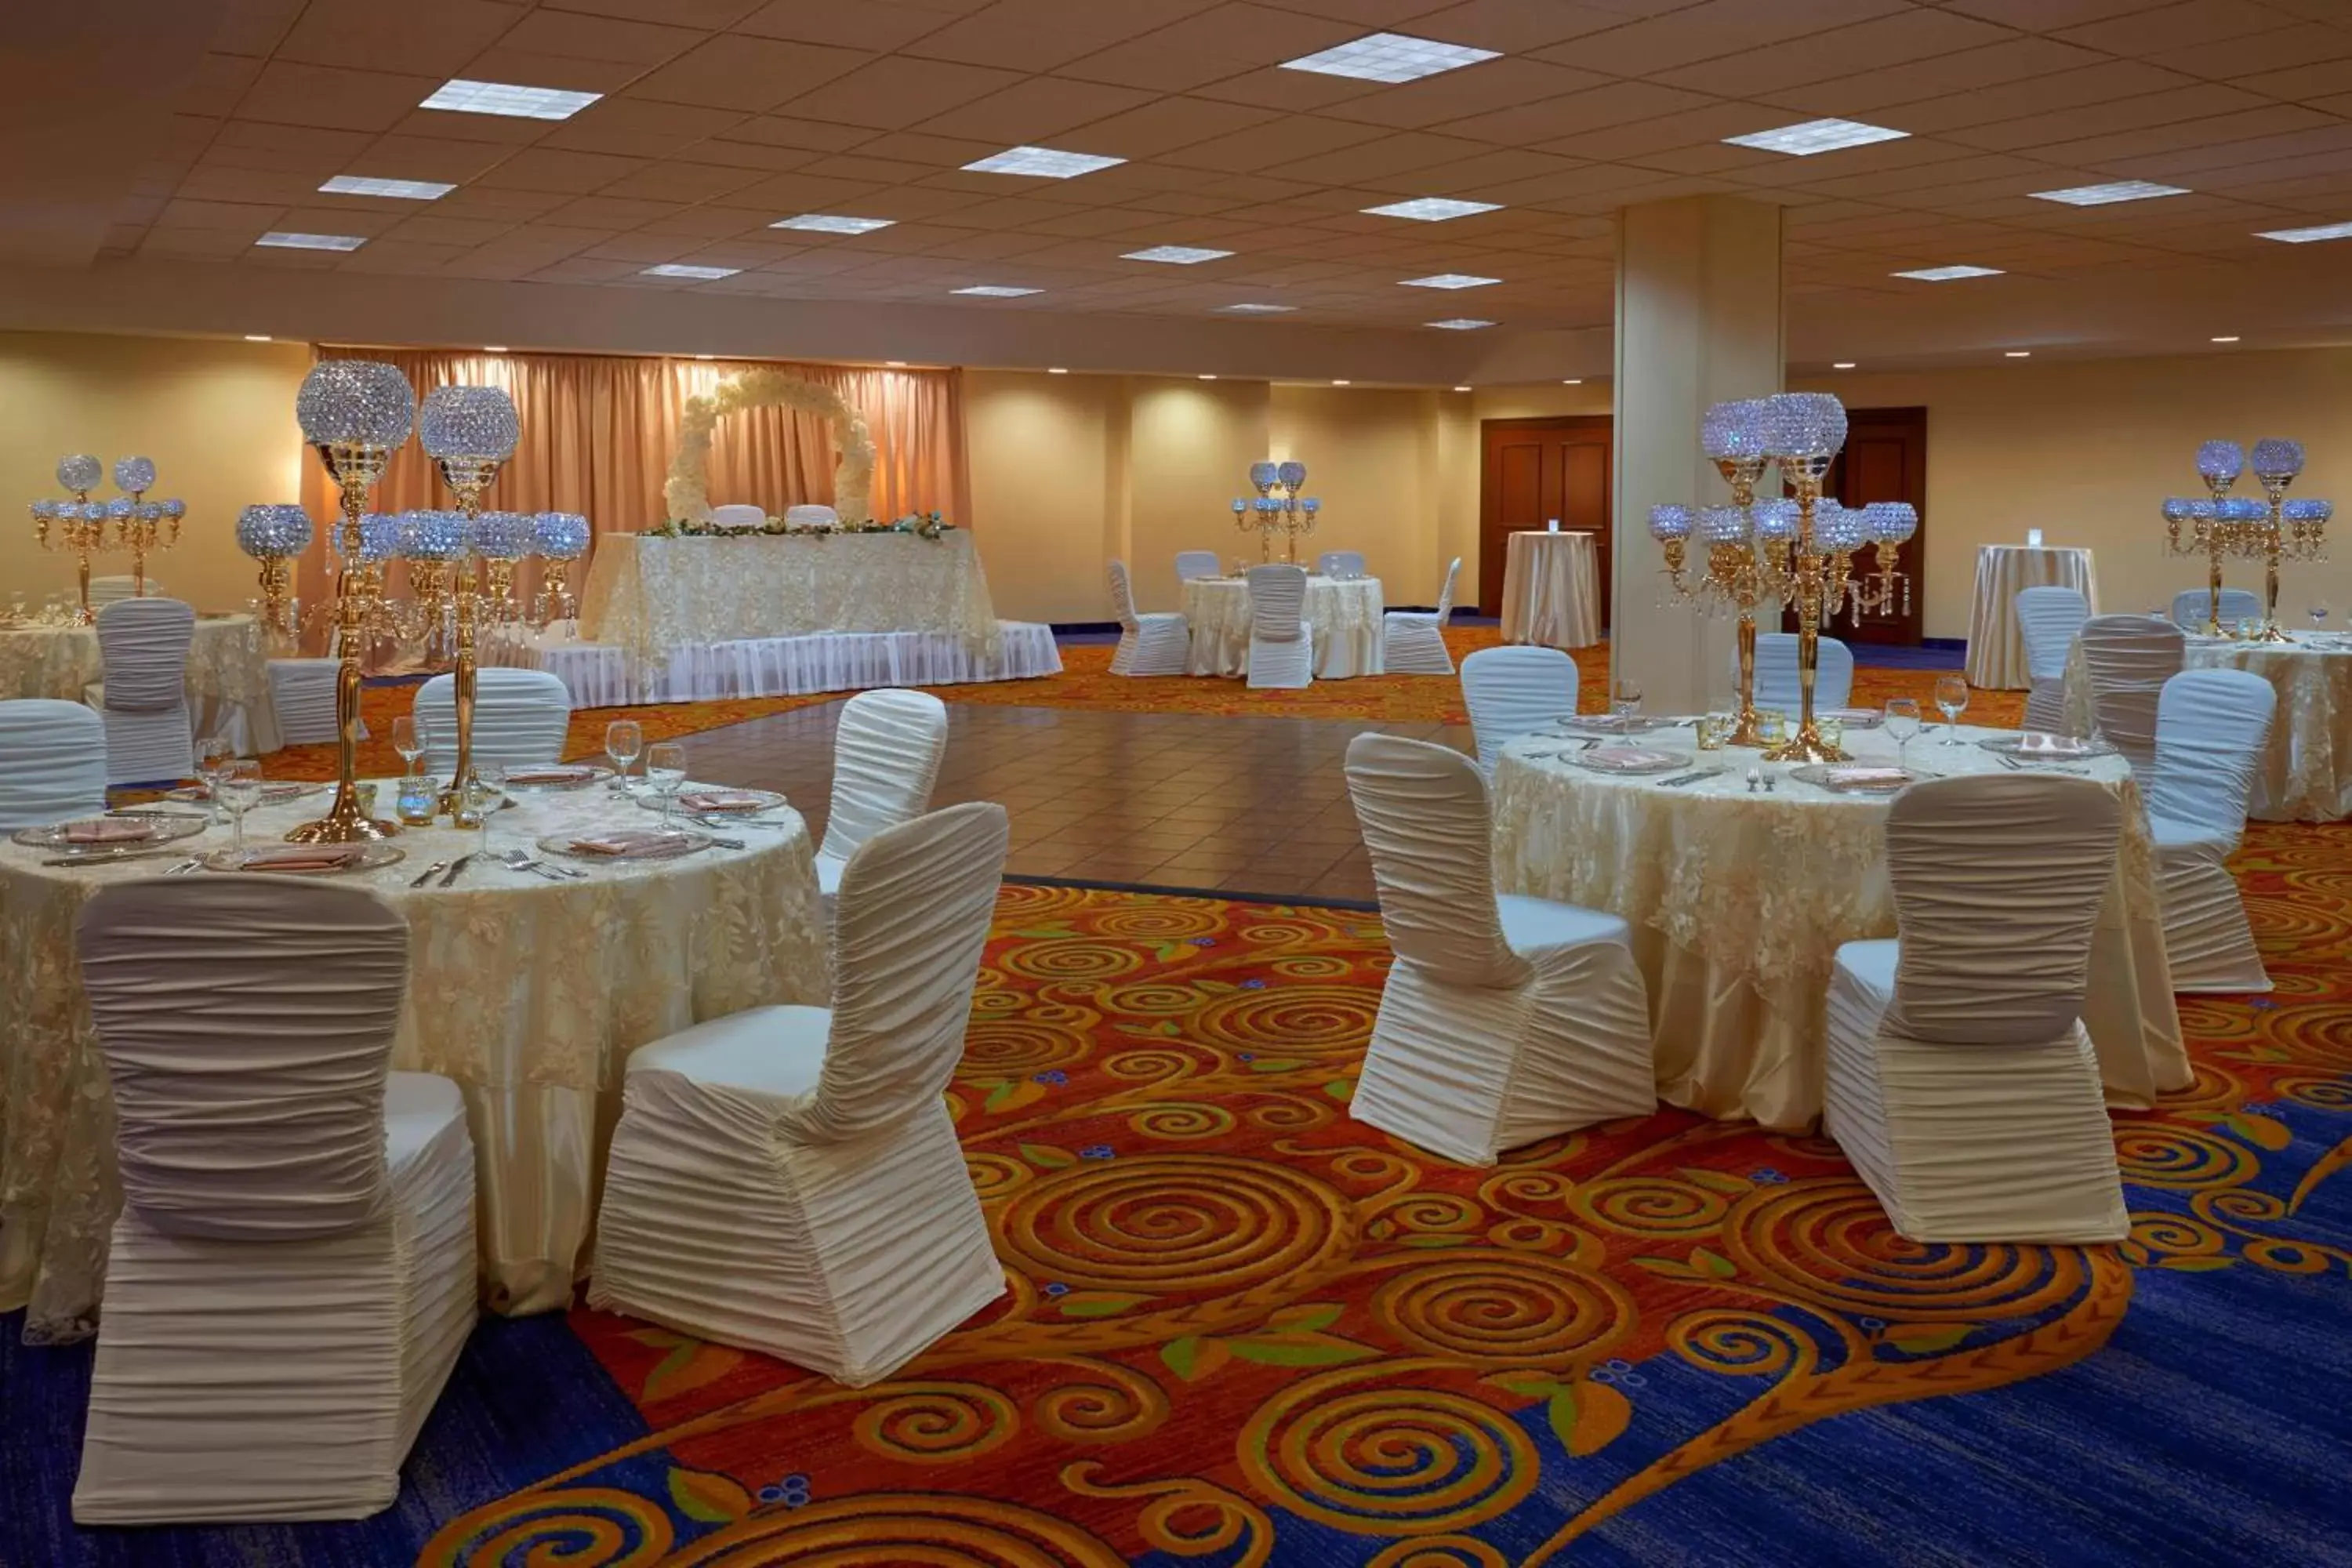 Banquet/Function facilities, Banquet Facilities in Ottawa Marriott Hotel